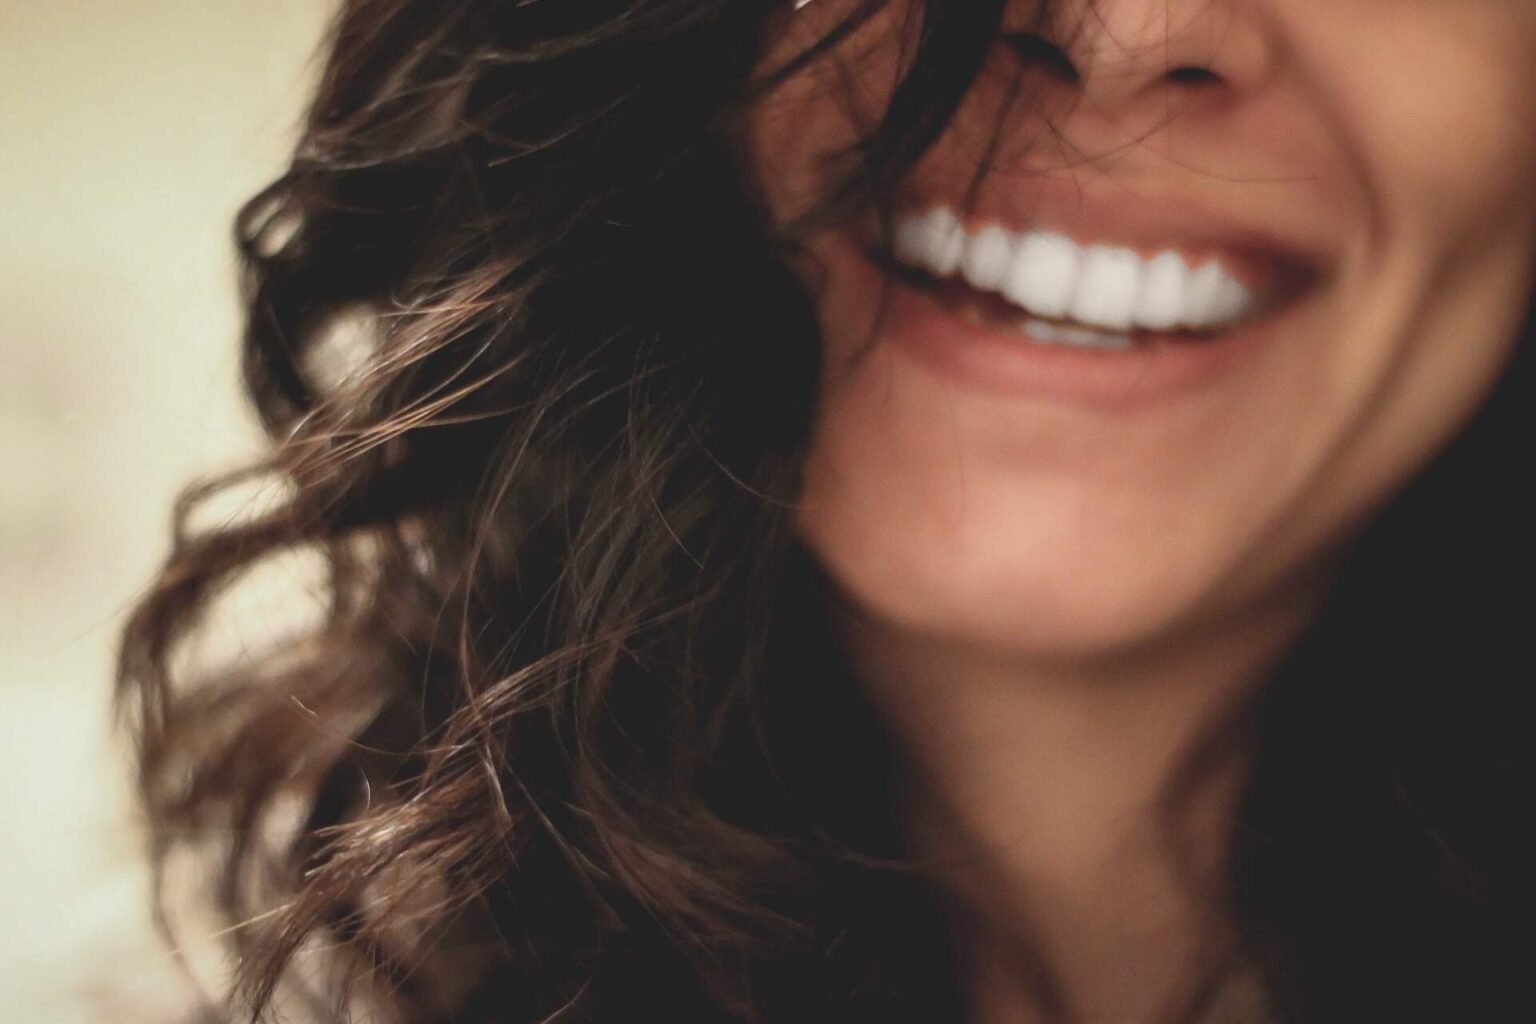 A woman smiles joyfully, her hair around her face.